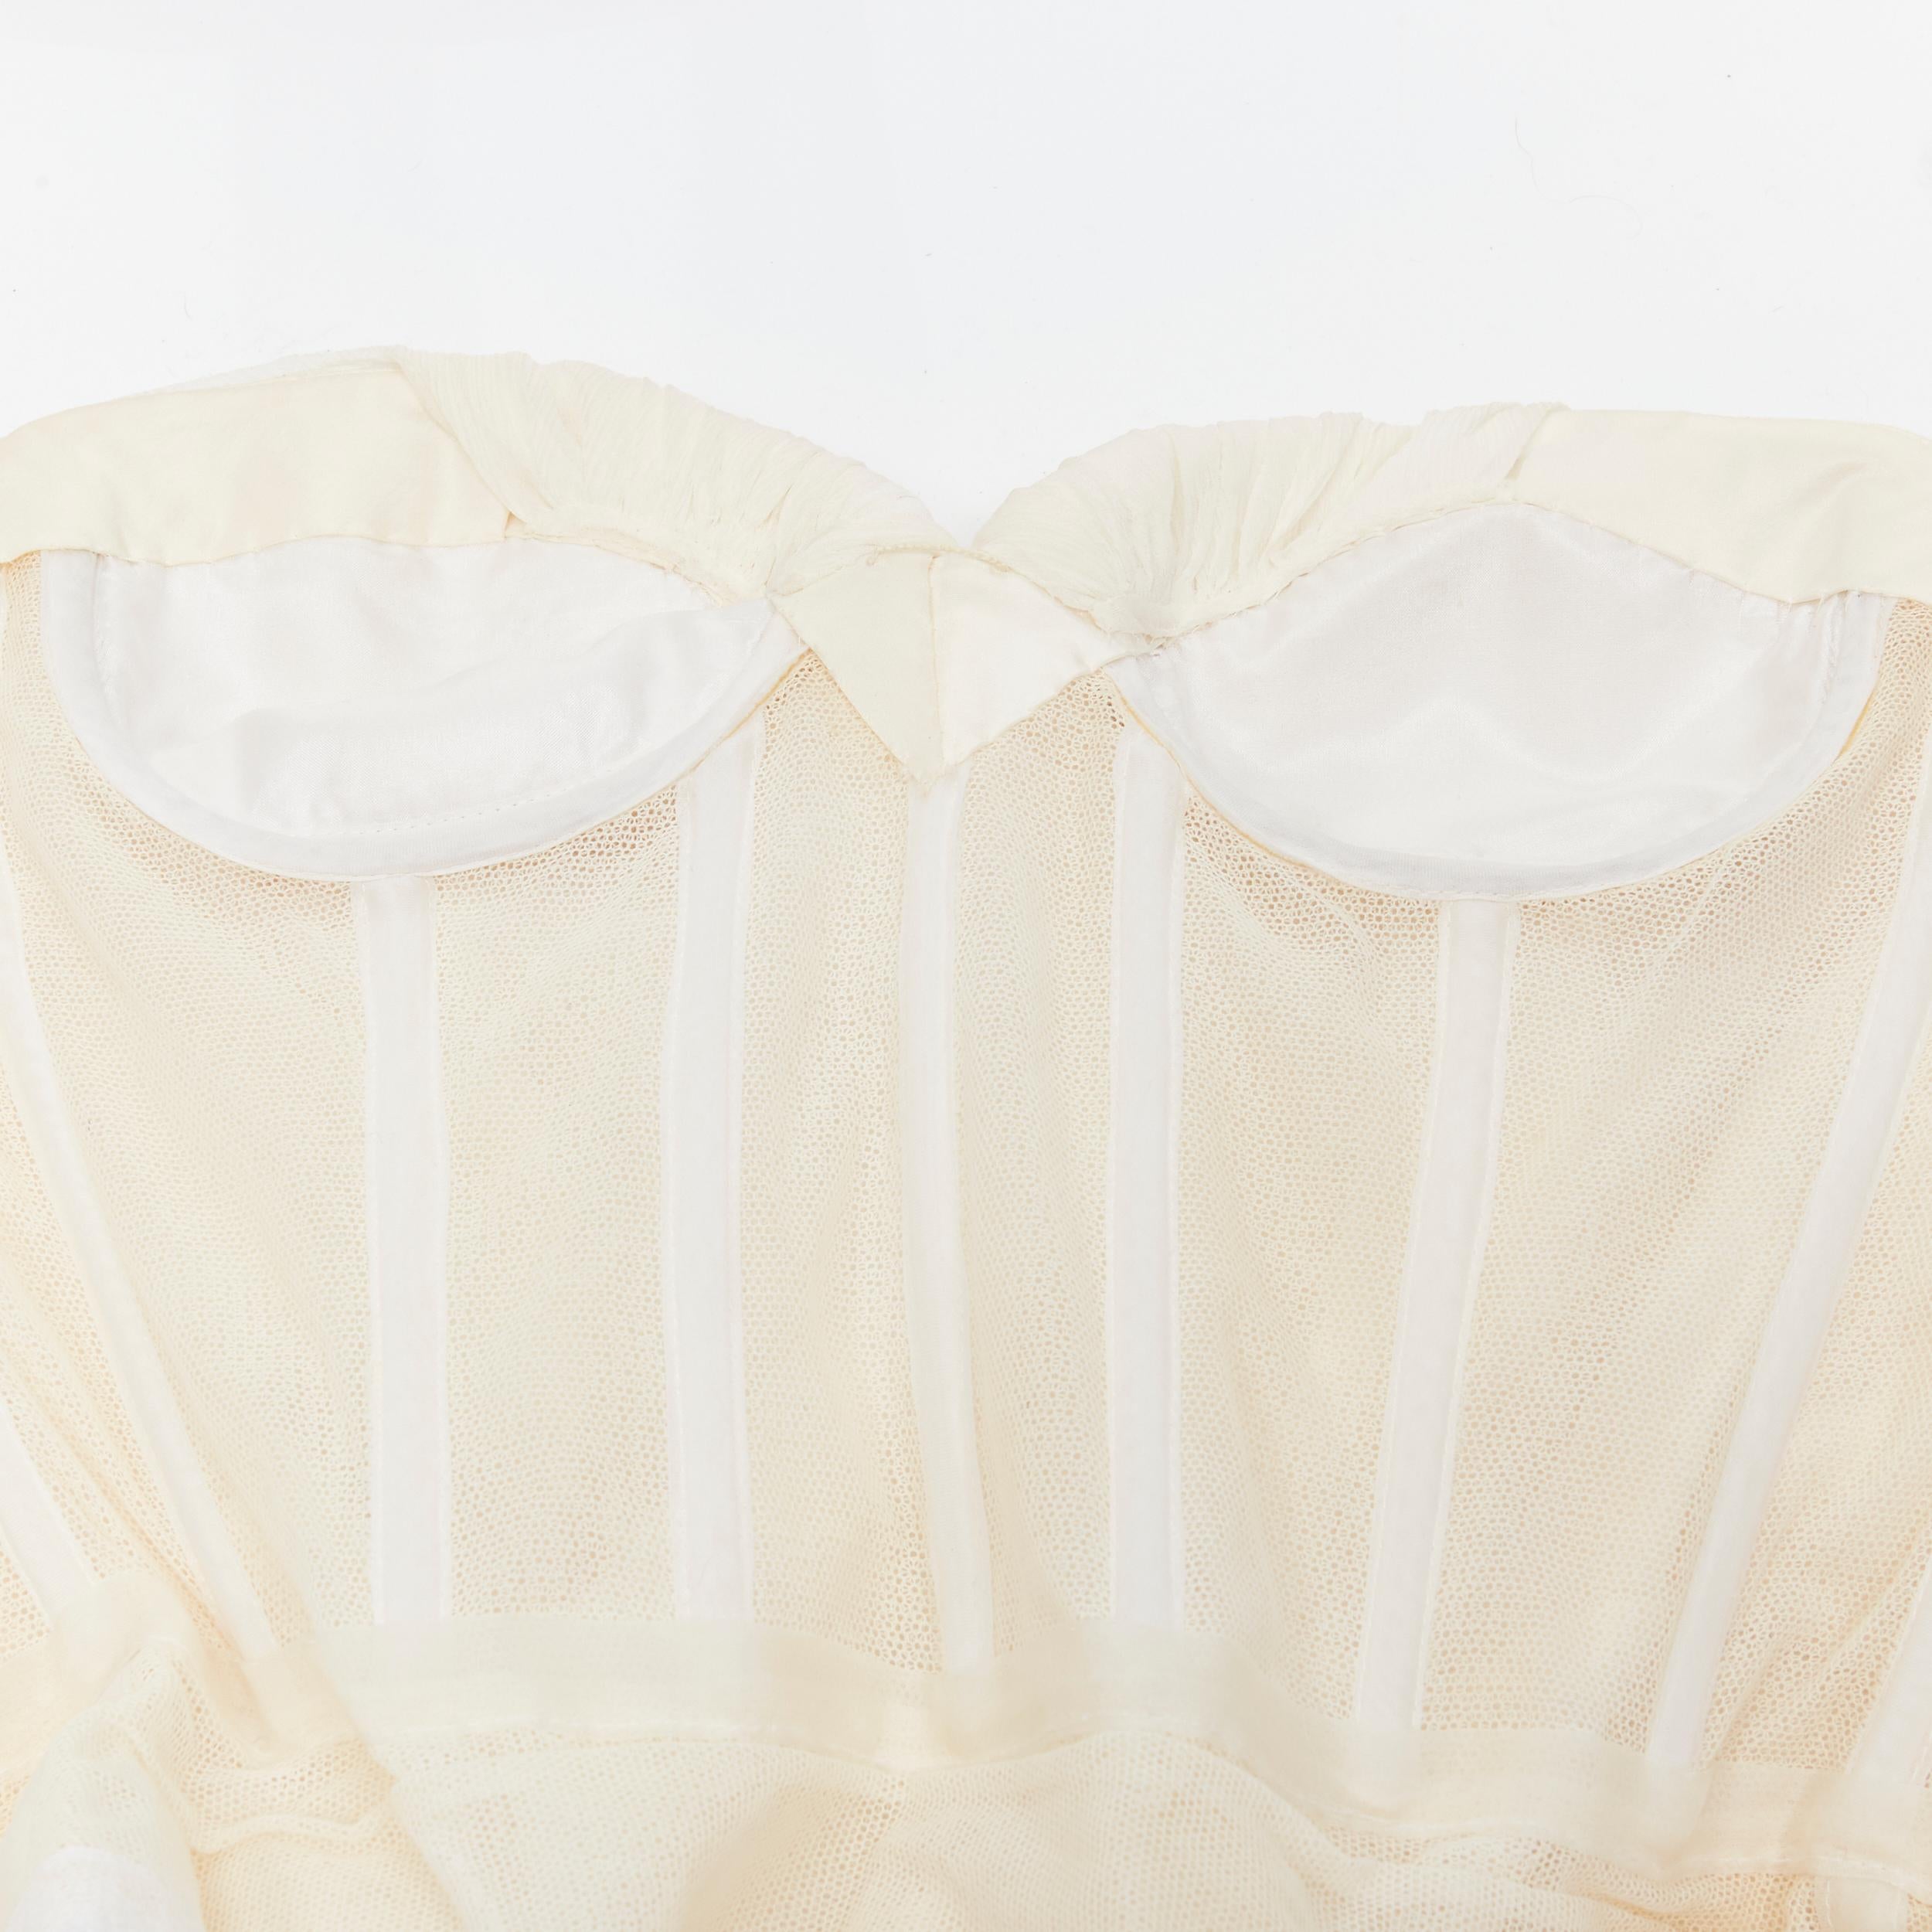 OSCAR DE LA RENTA ivory white boned corset strapless evening gown dress US0 XS 5